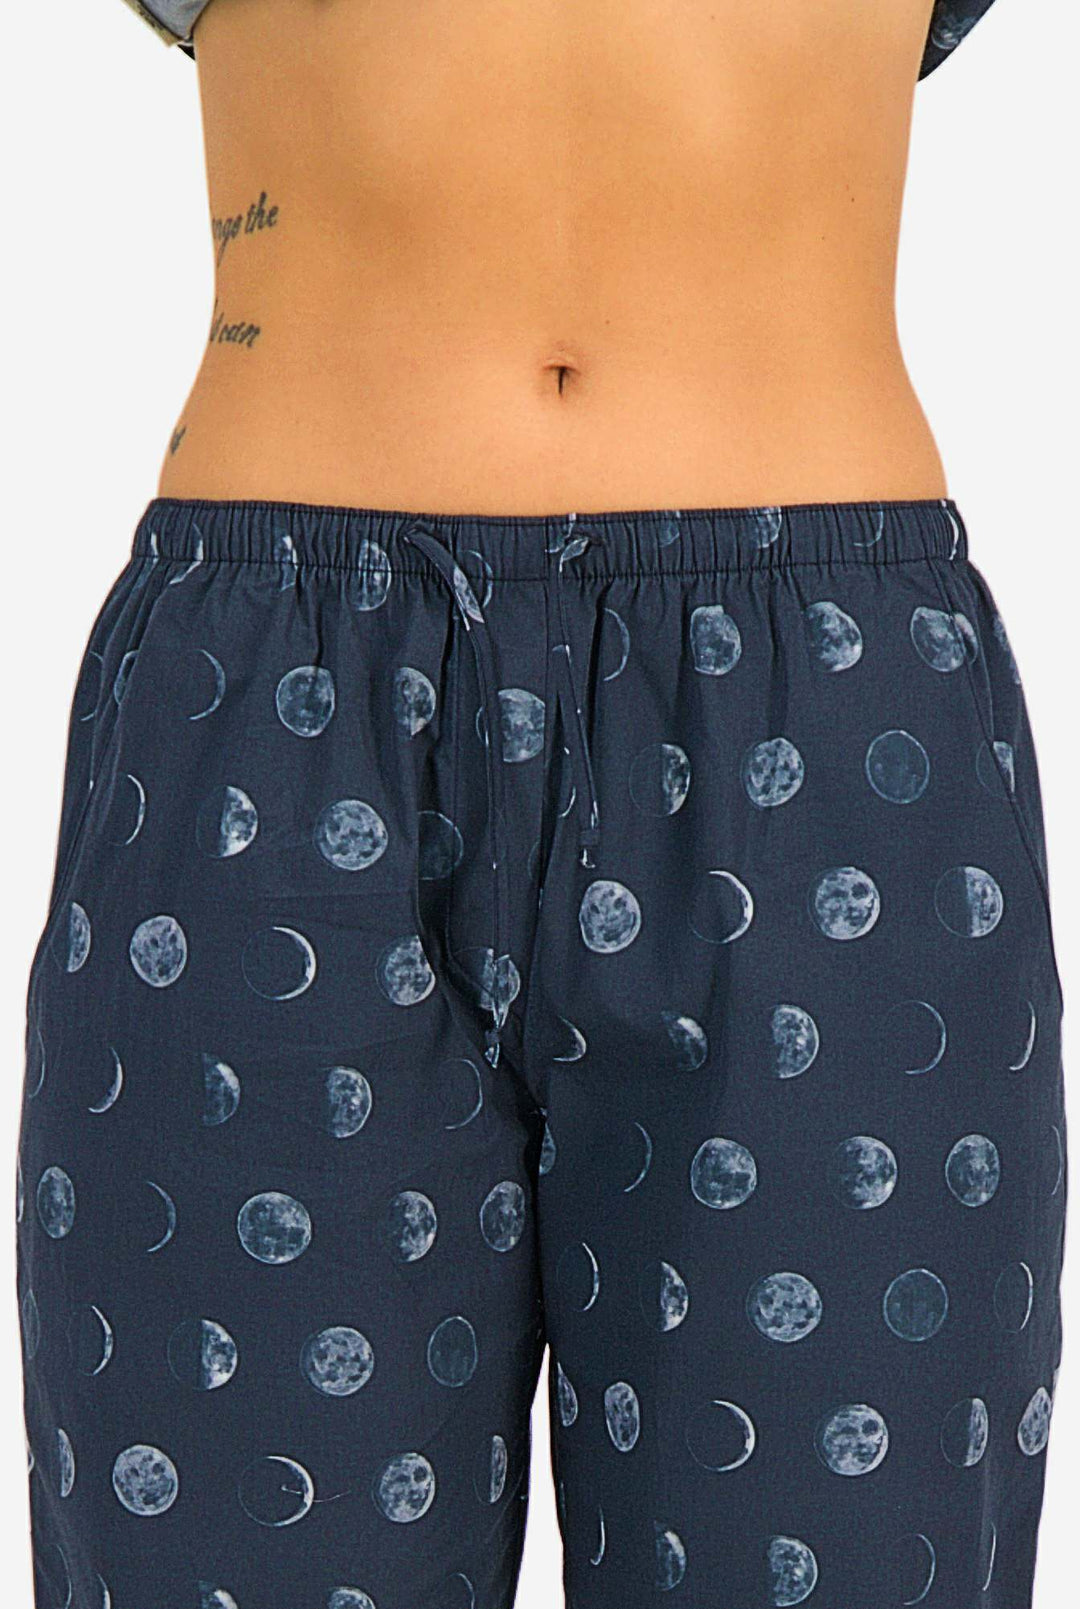 Womens lounge pants - Blue moons